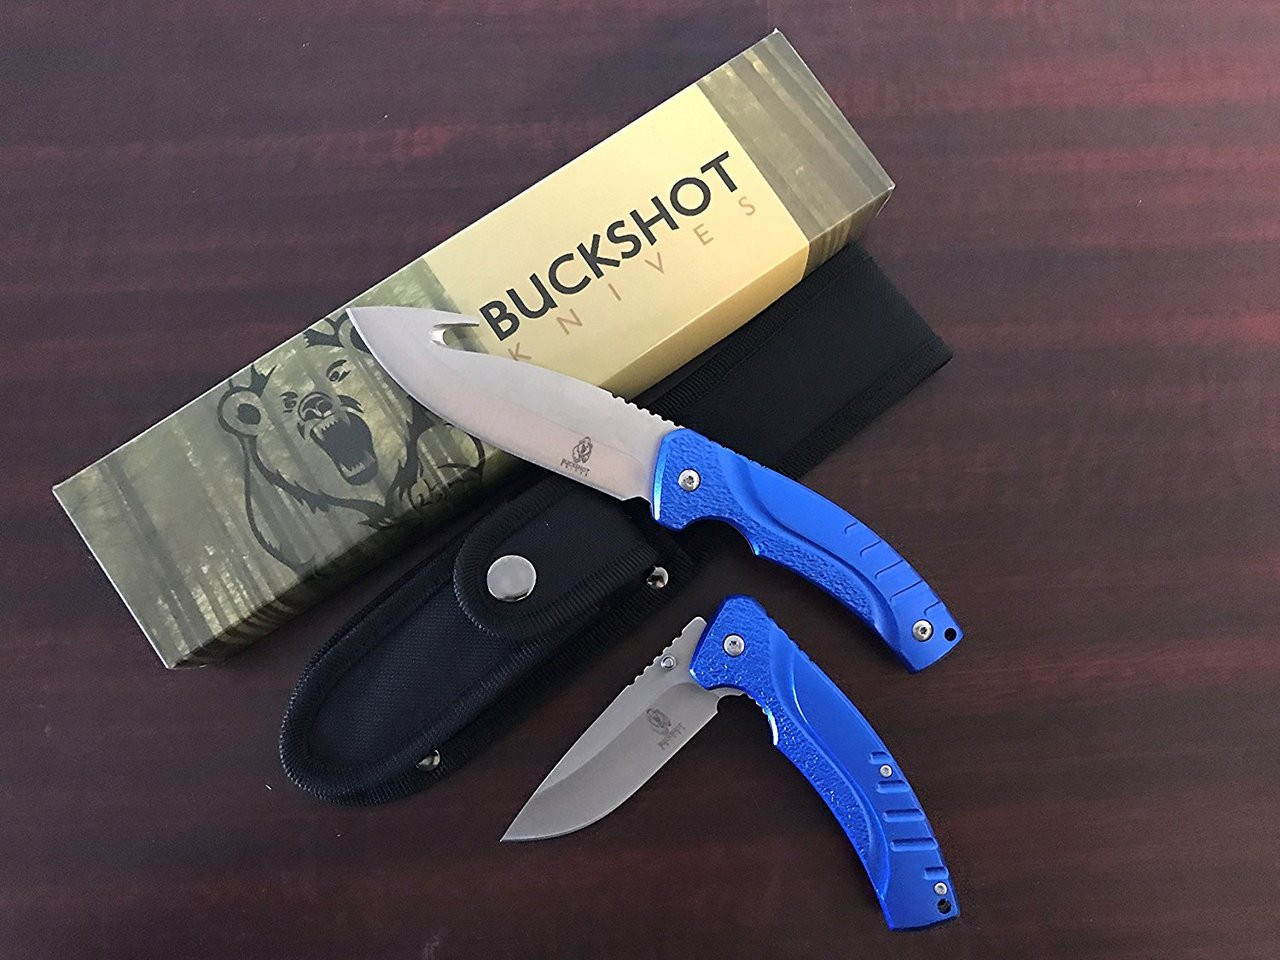 Buckshot Knives Full tang camping hunting knife & pocket knife set - HBK10BL